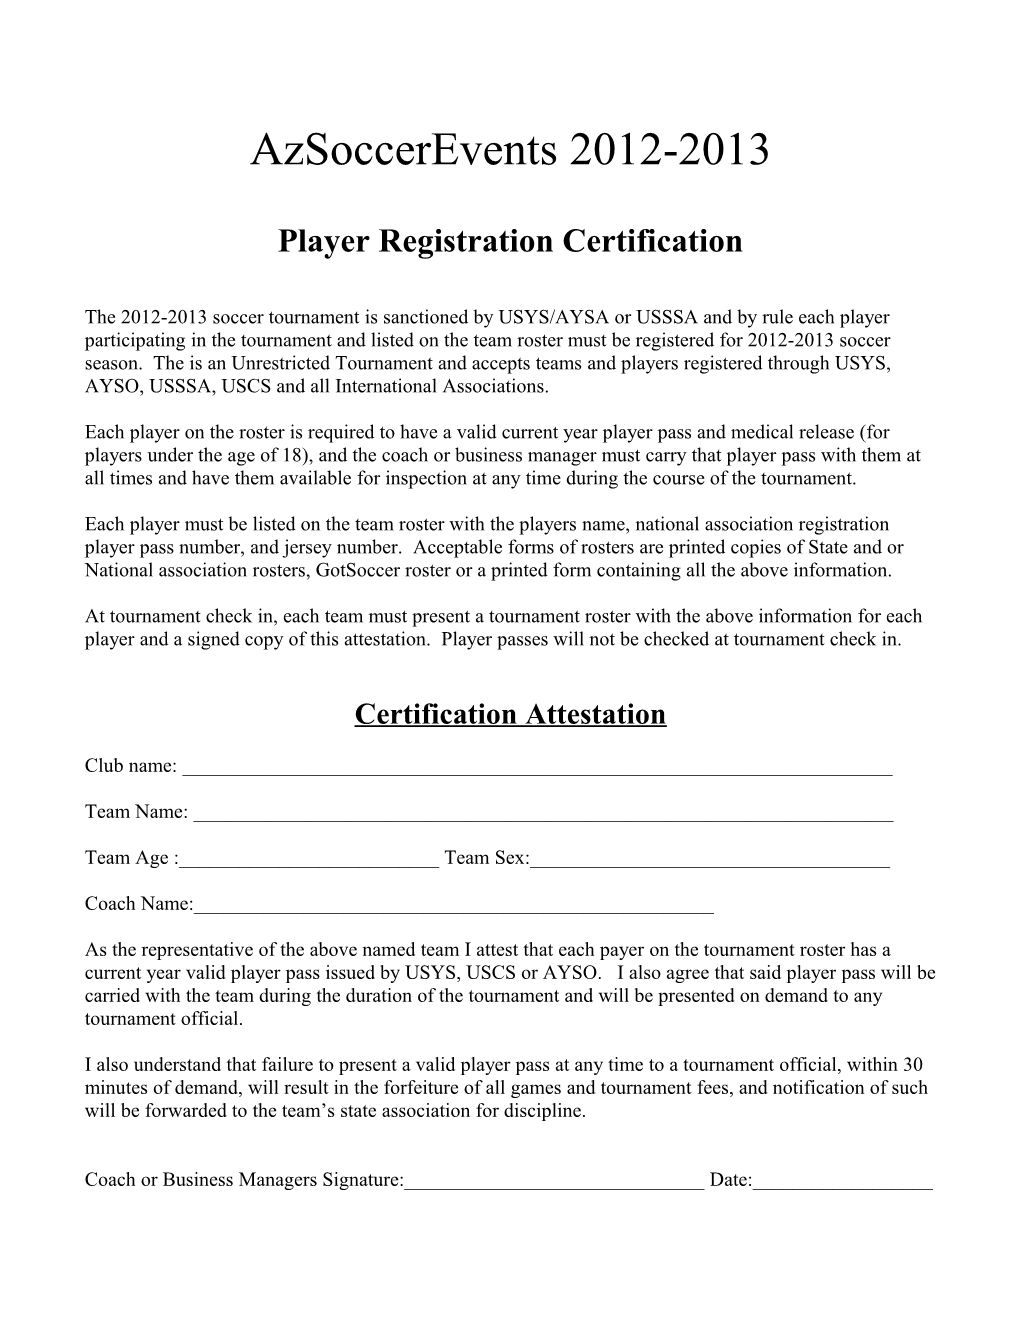 Player Registration Certification